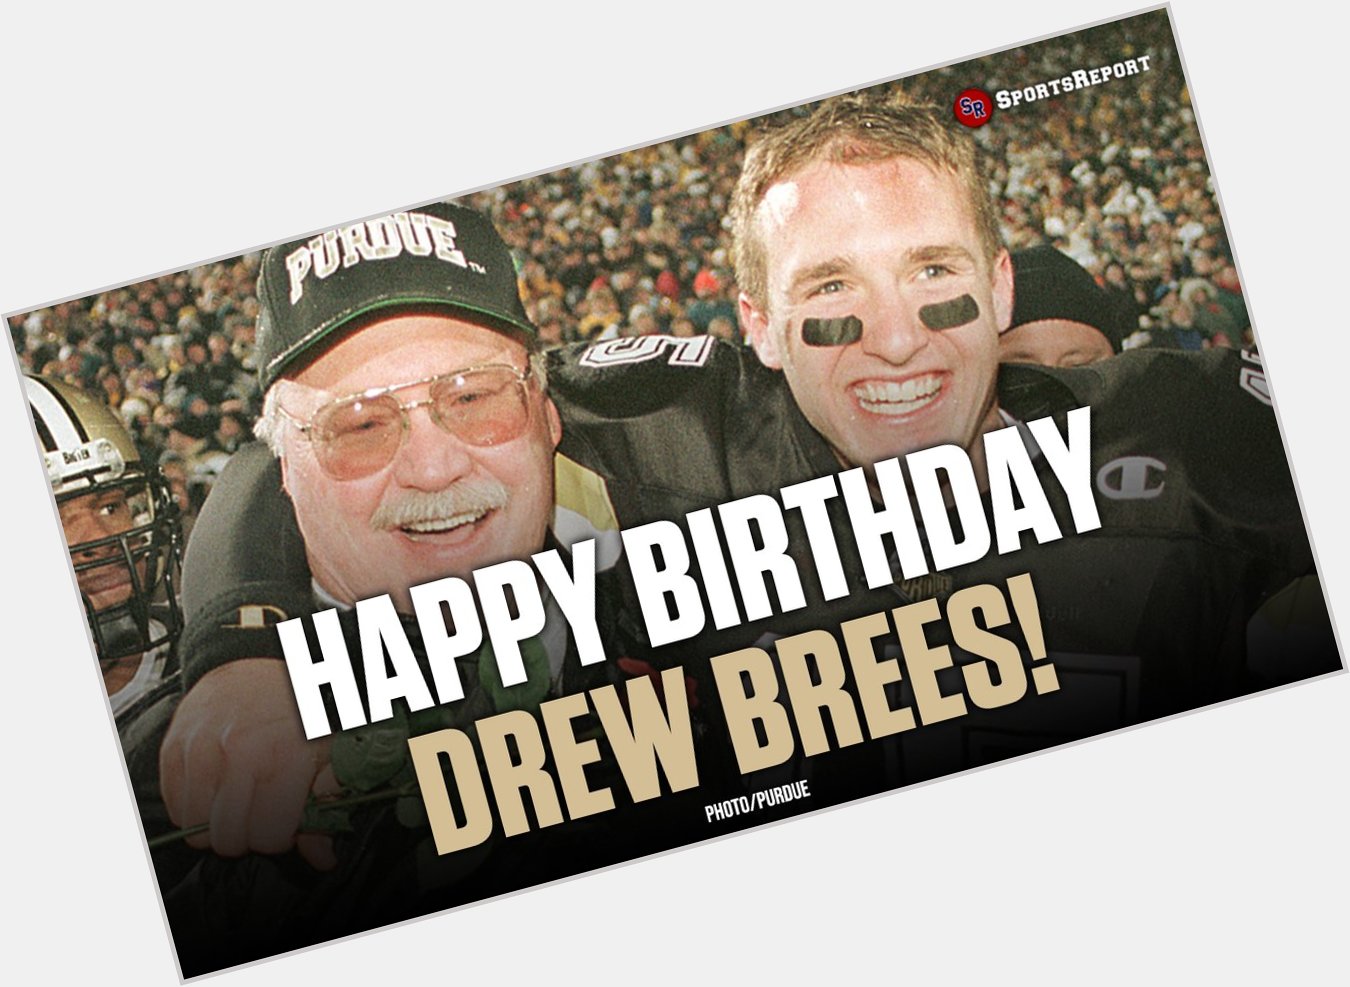  Fans, let\s wish Legend Drew Brees a Happy Birthday! 